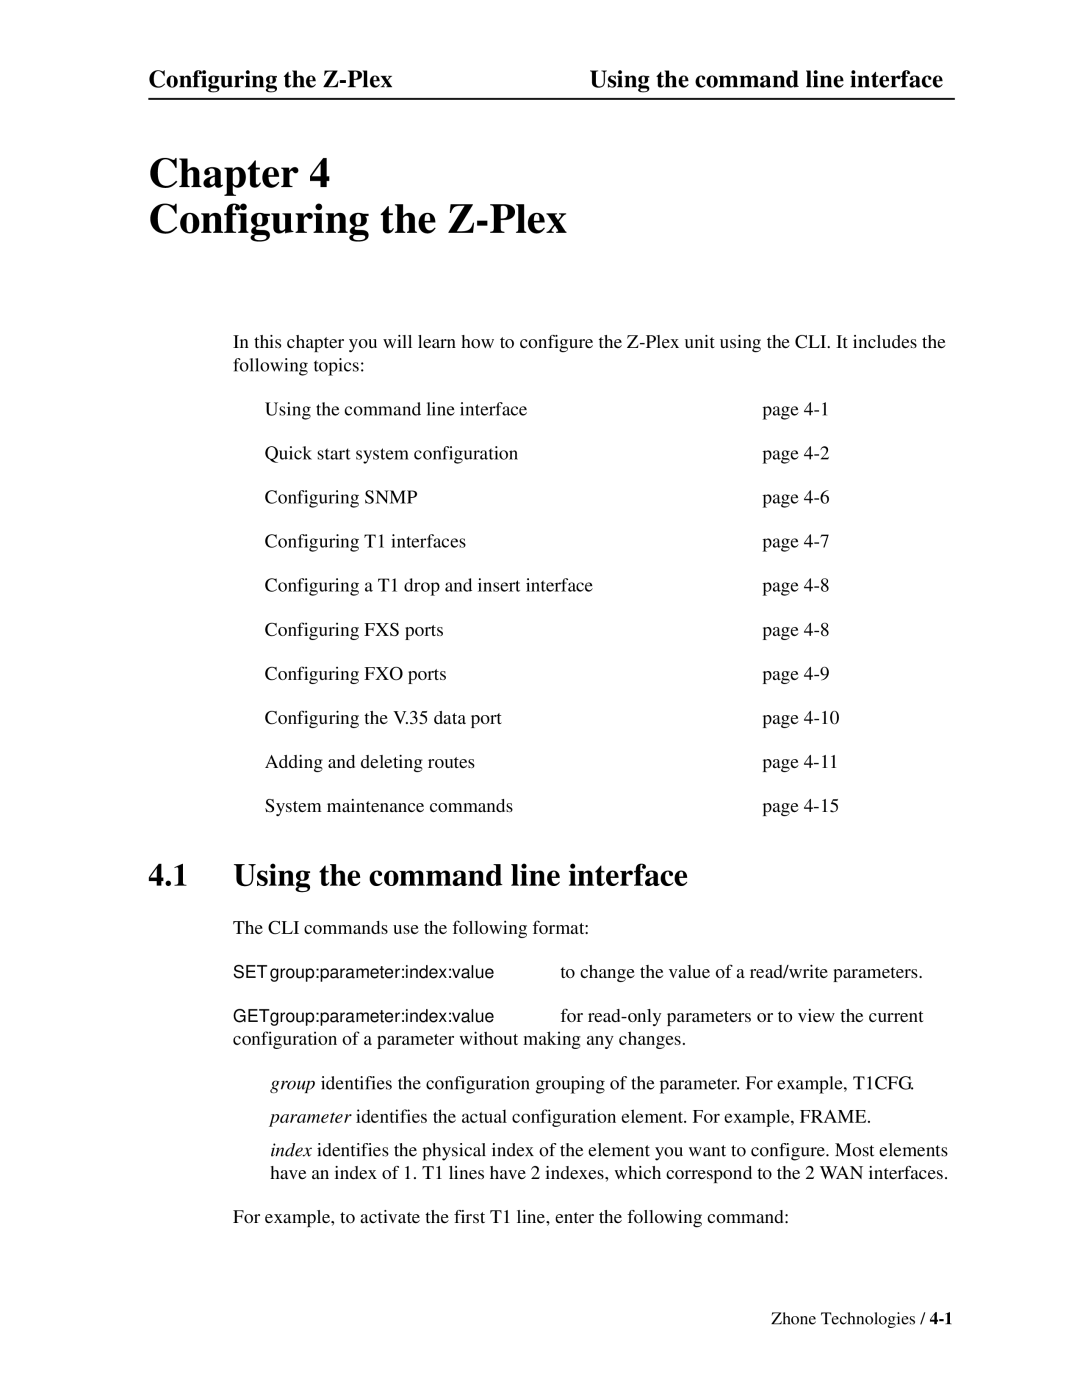 Zhone Technologies Z-PLEX-10-24-DOC-SC manual Using the command line interface 